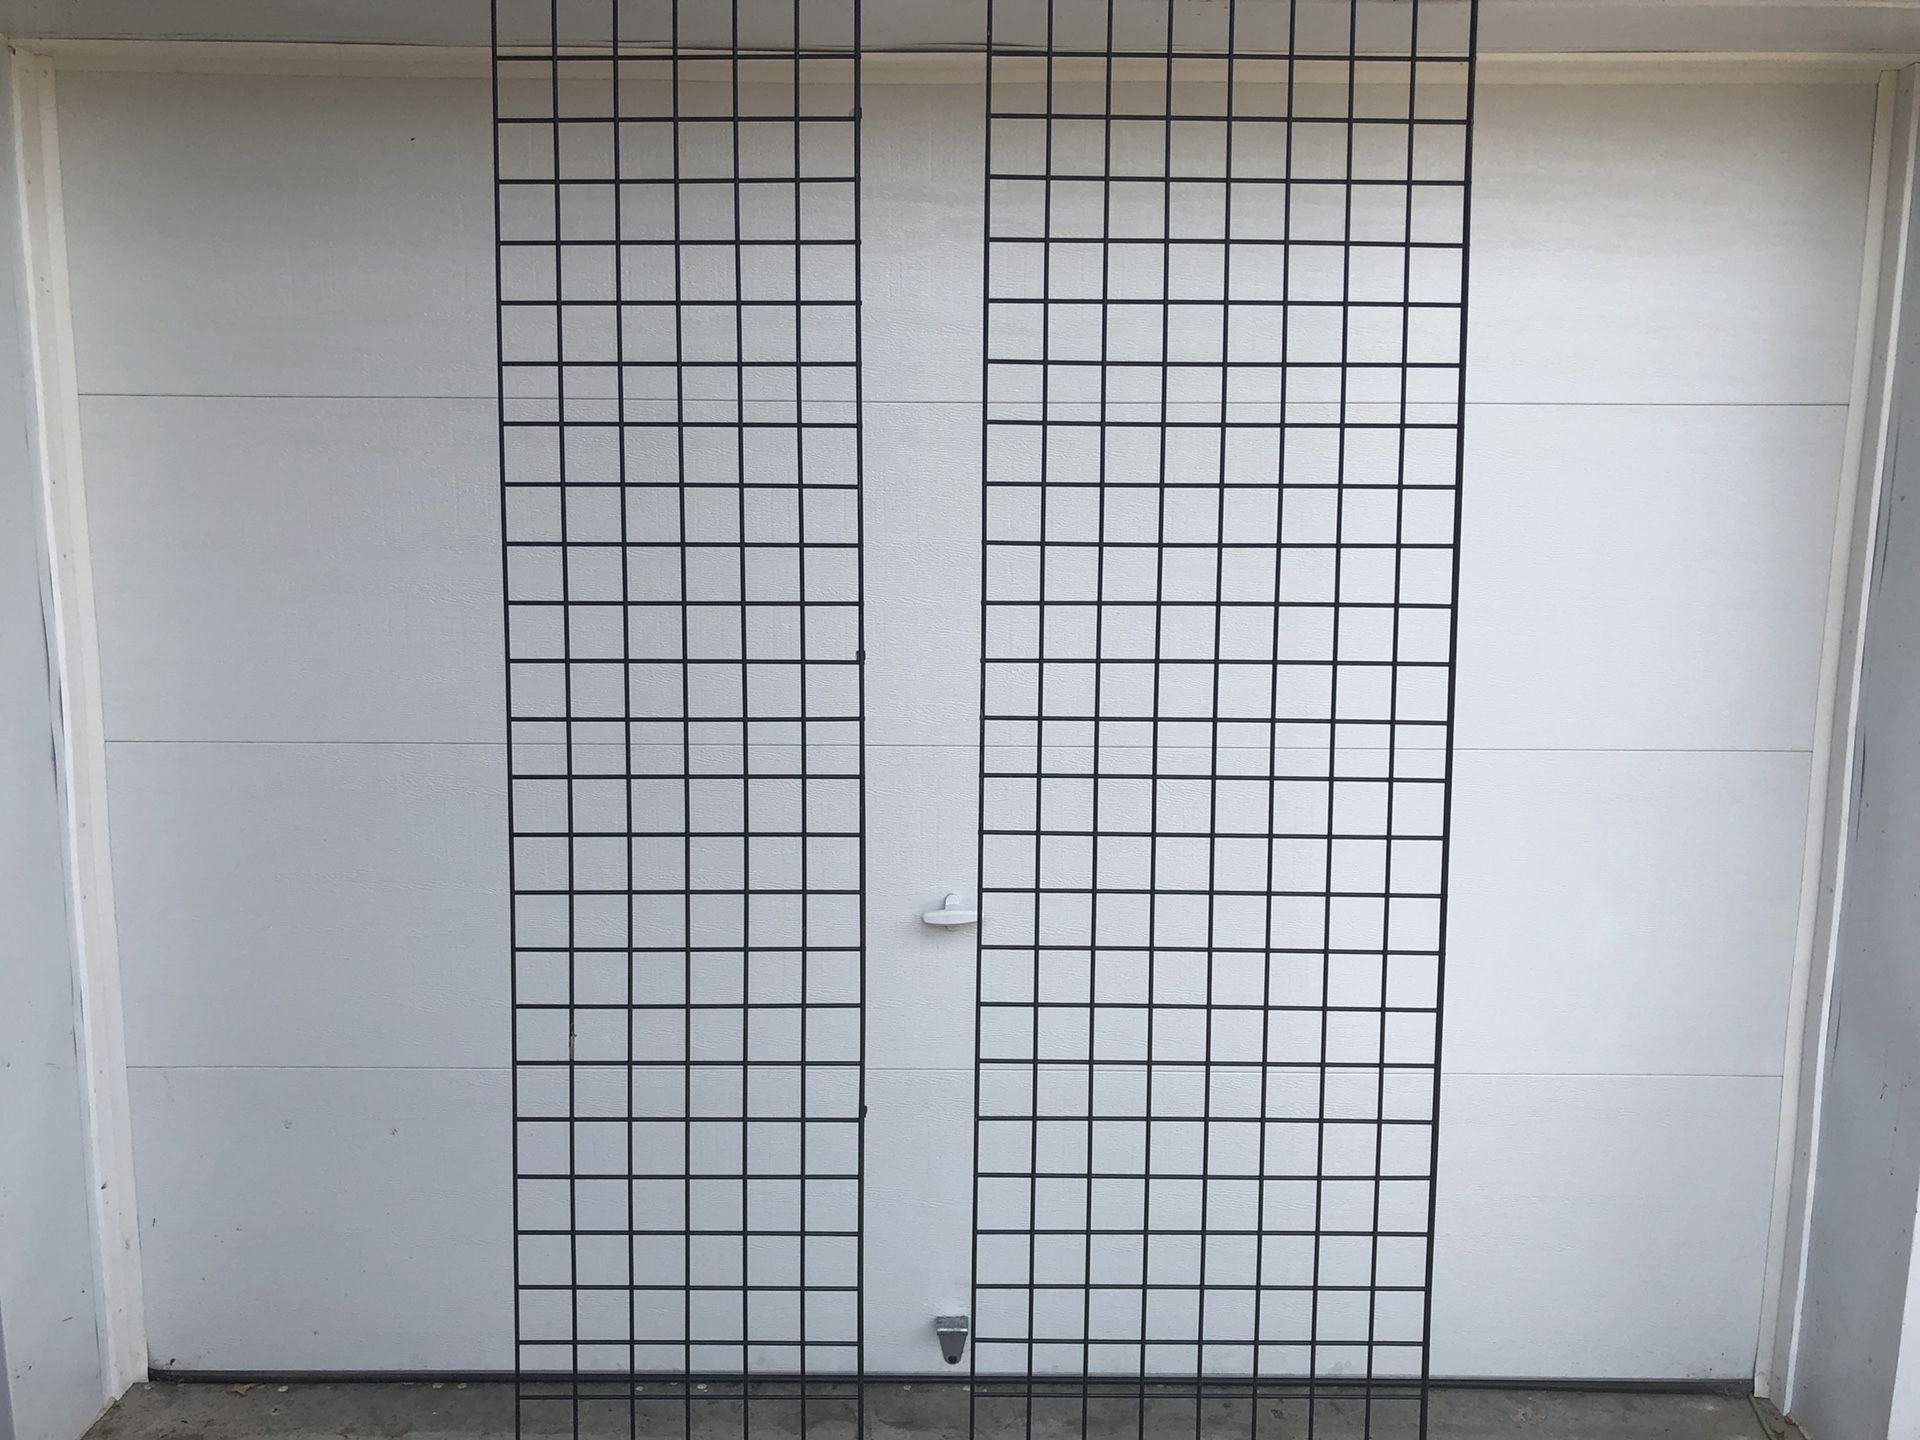 Coated Black Metal Grid Wall & Gray Metal Square Display Stands